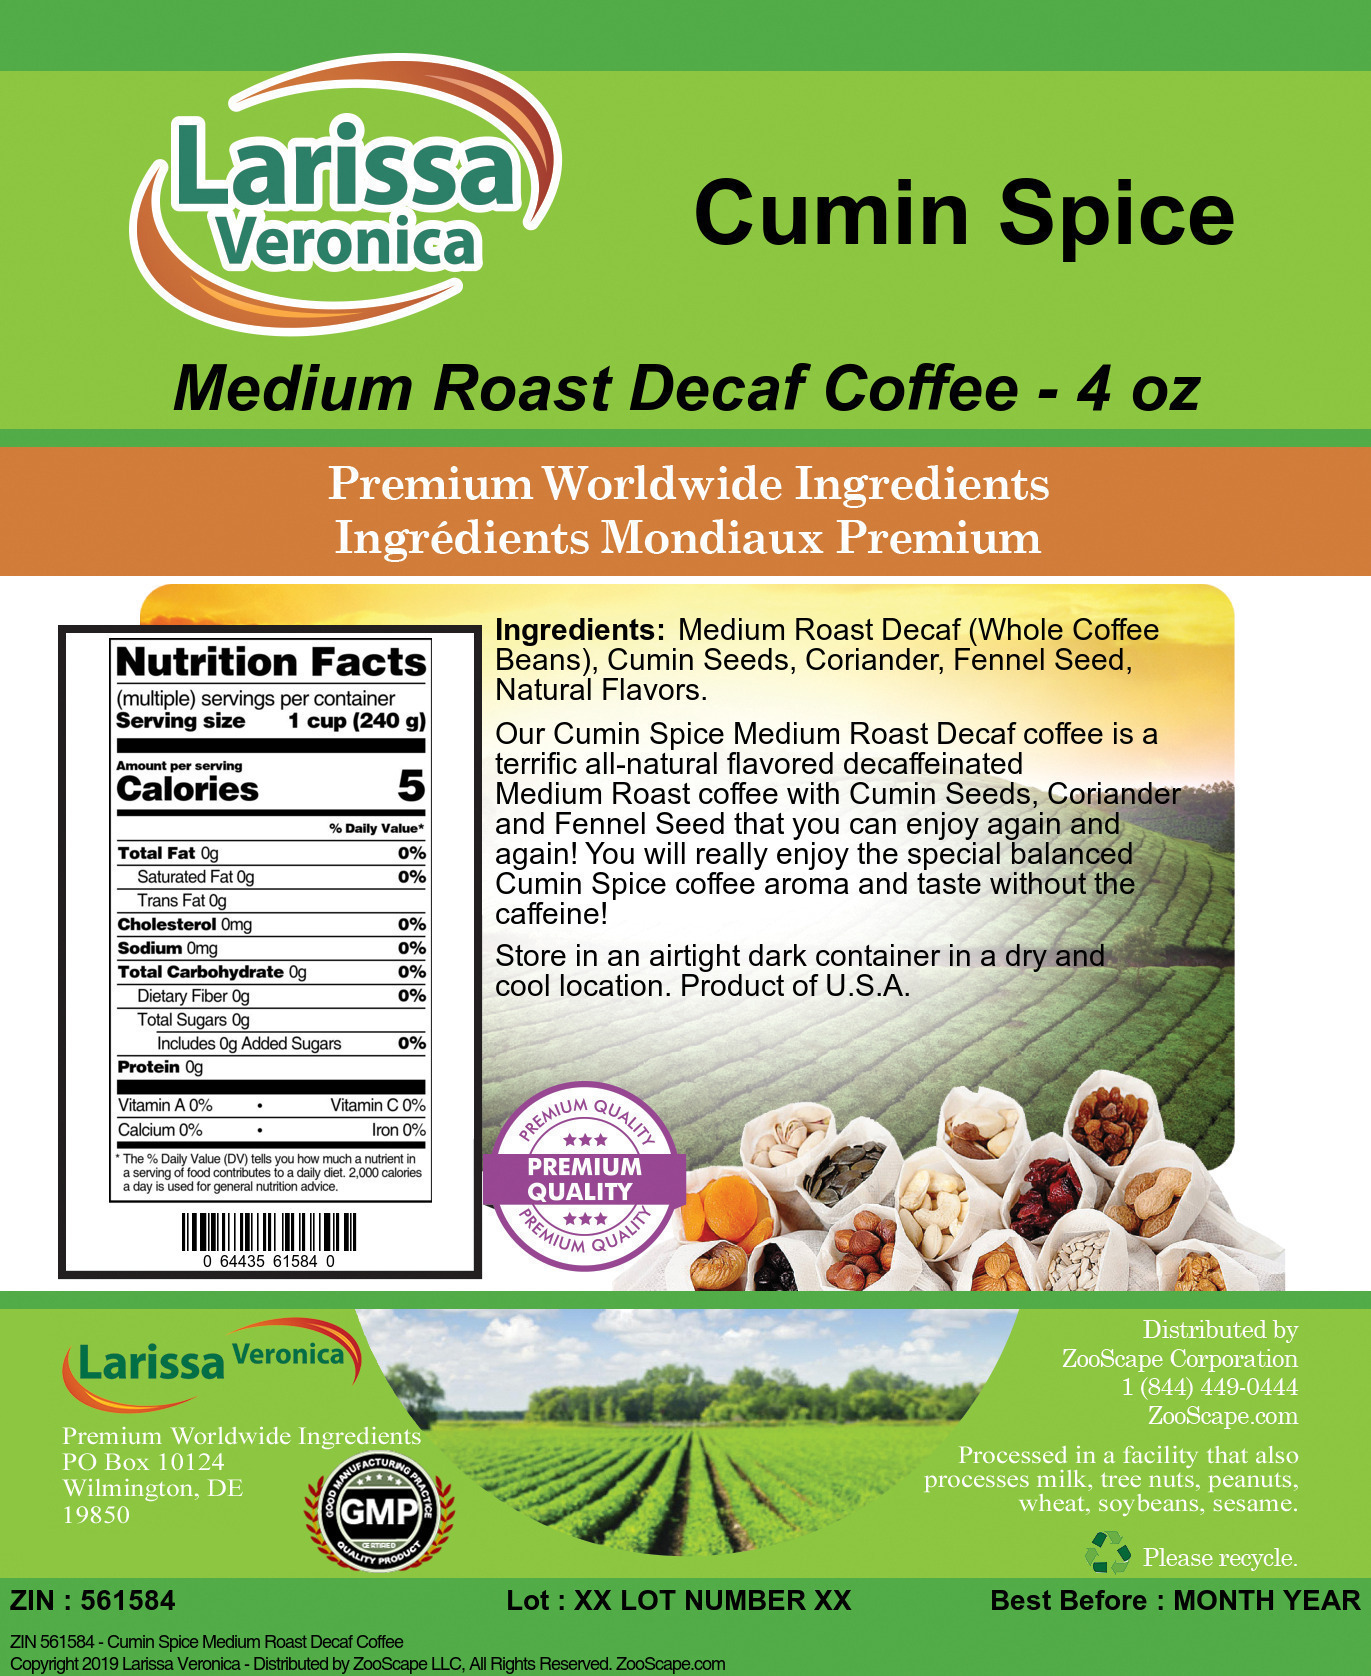 Cumin Spice Medium Roast Decaf Coffee - Label